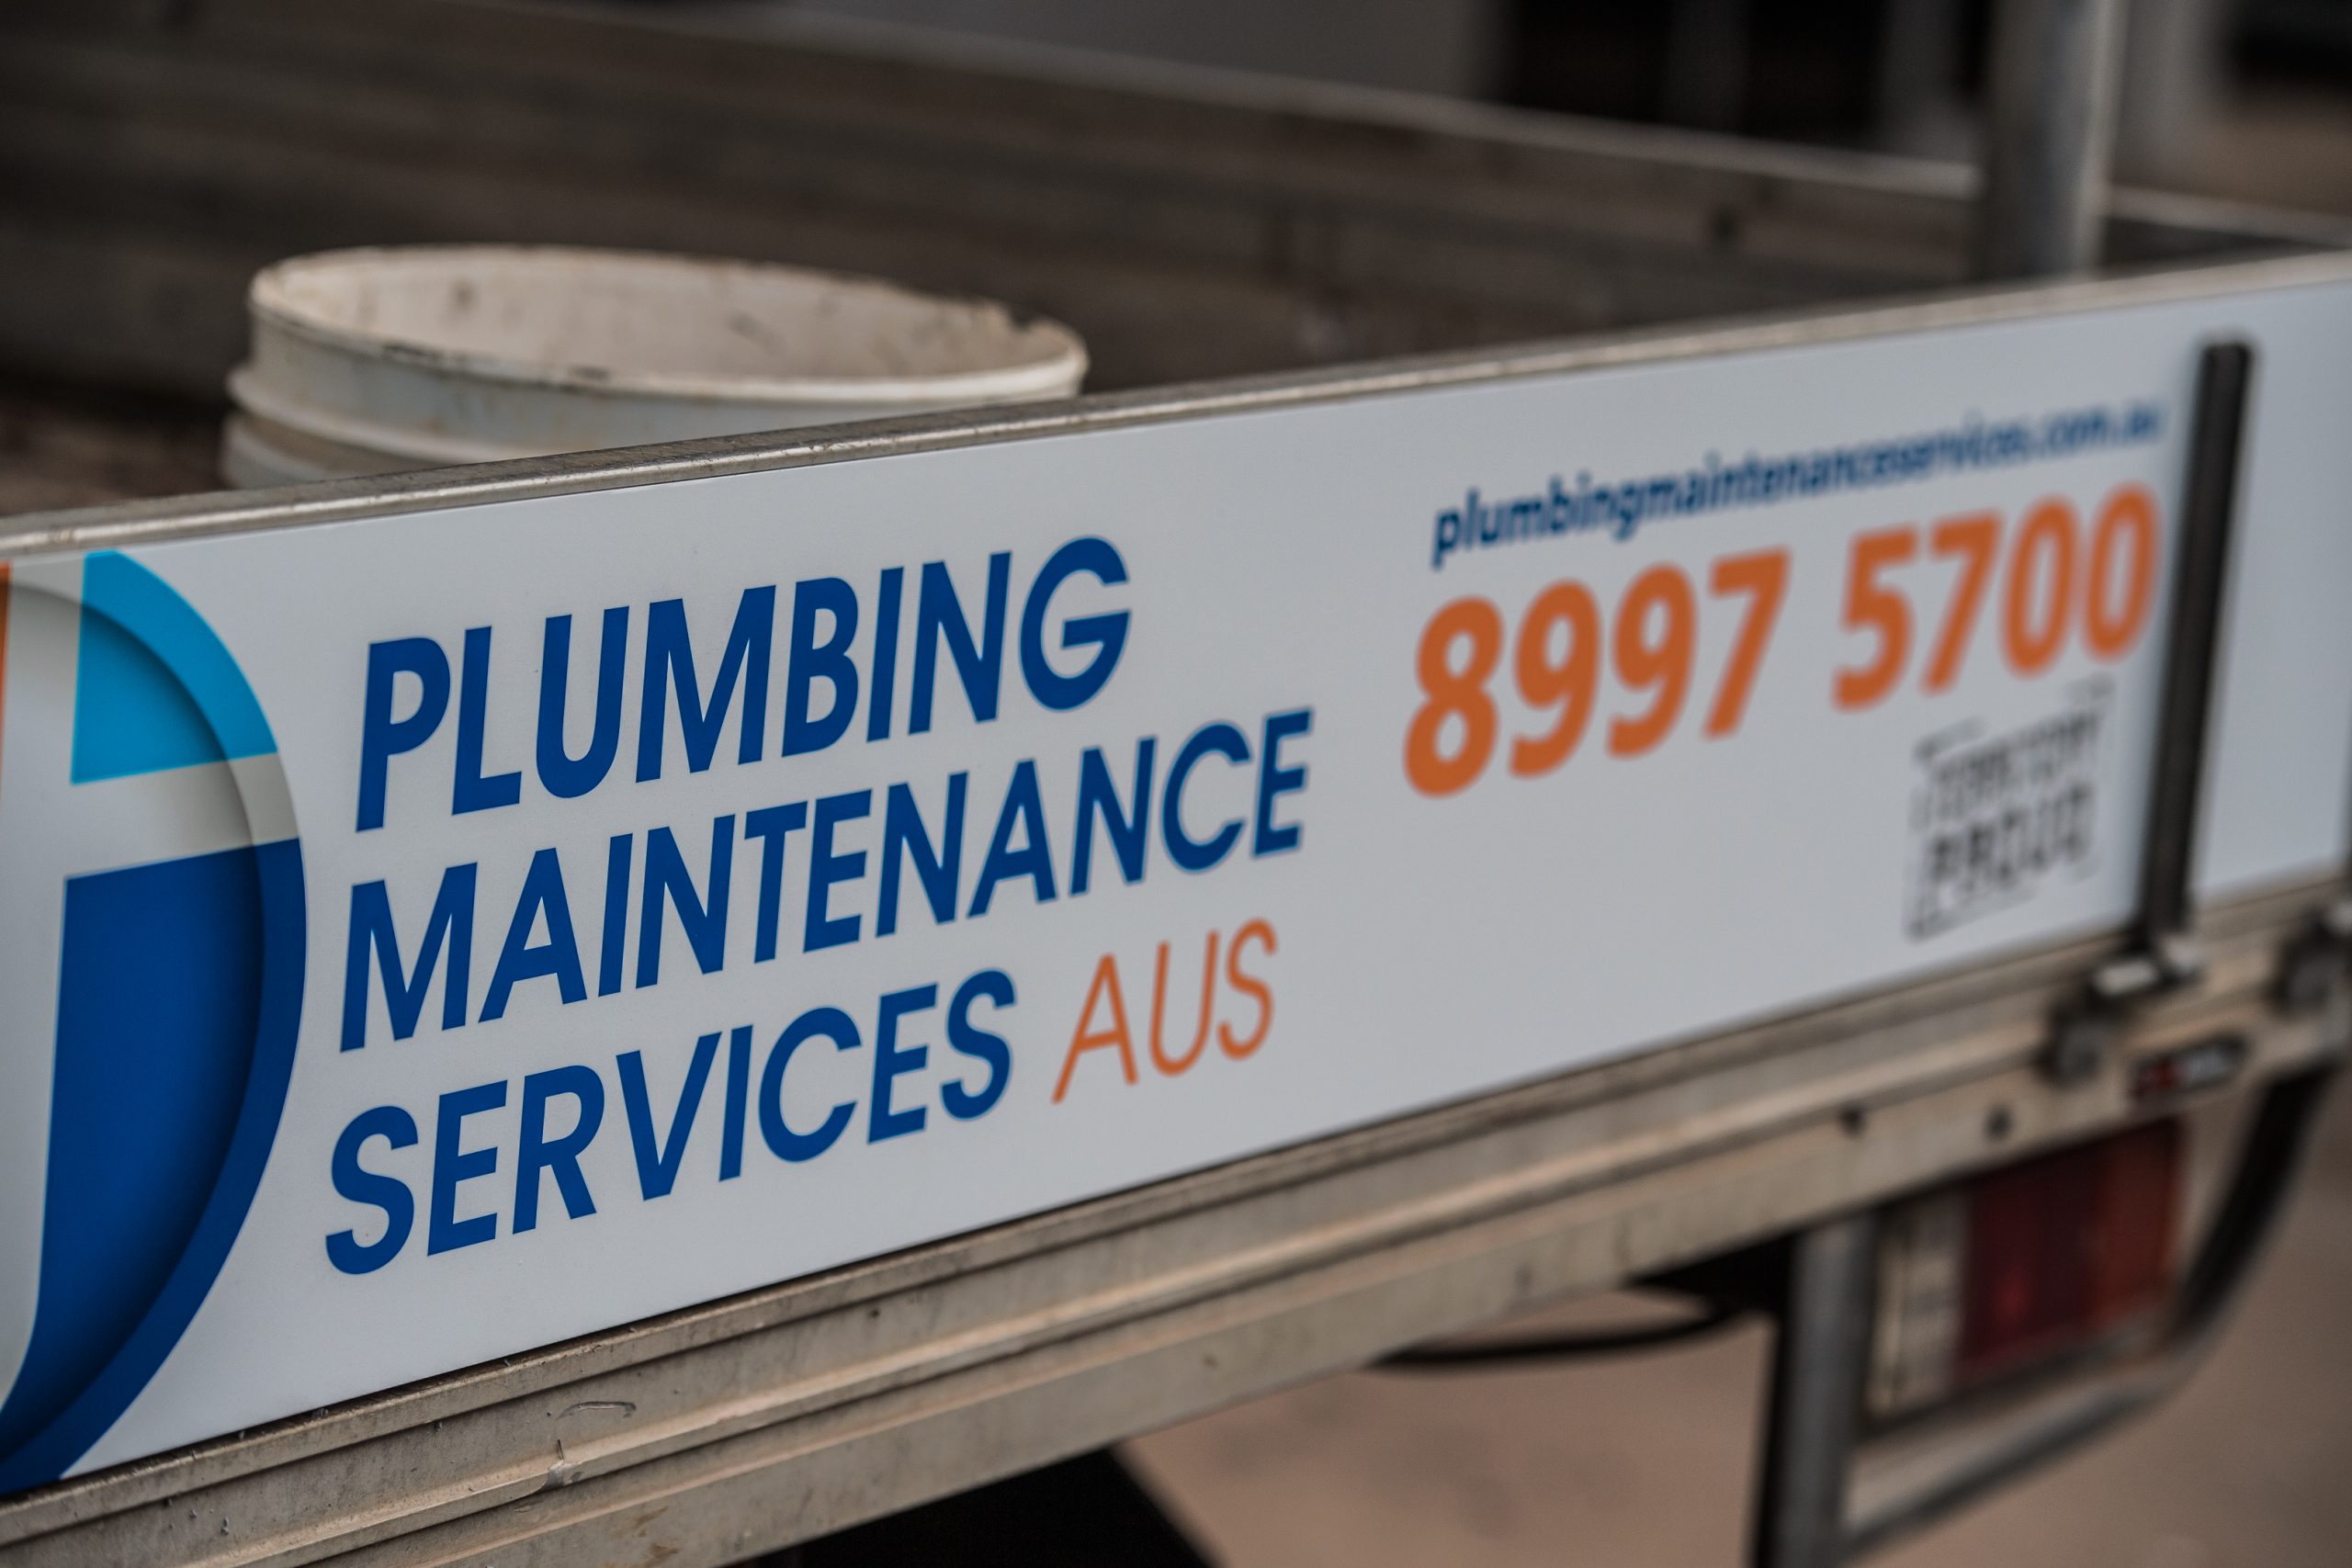 PLUMBING MAINTENANCE SERVICES VEHICLE Plumbing Maintenance Services AUS - Darwin and North Brisbane